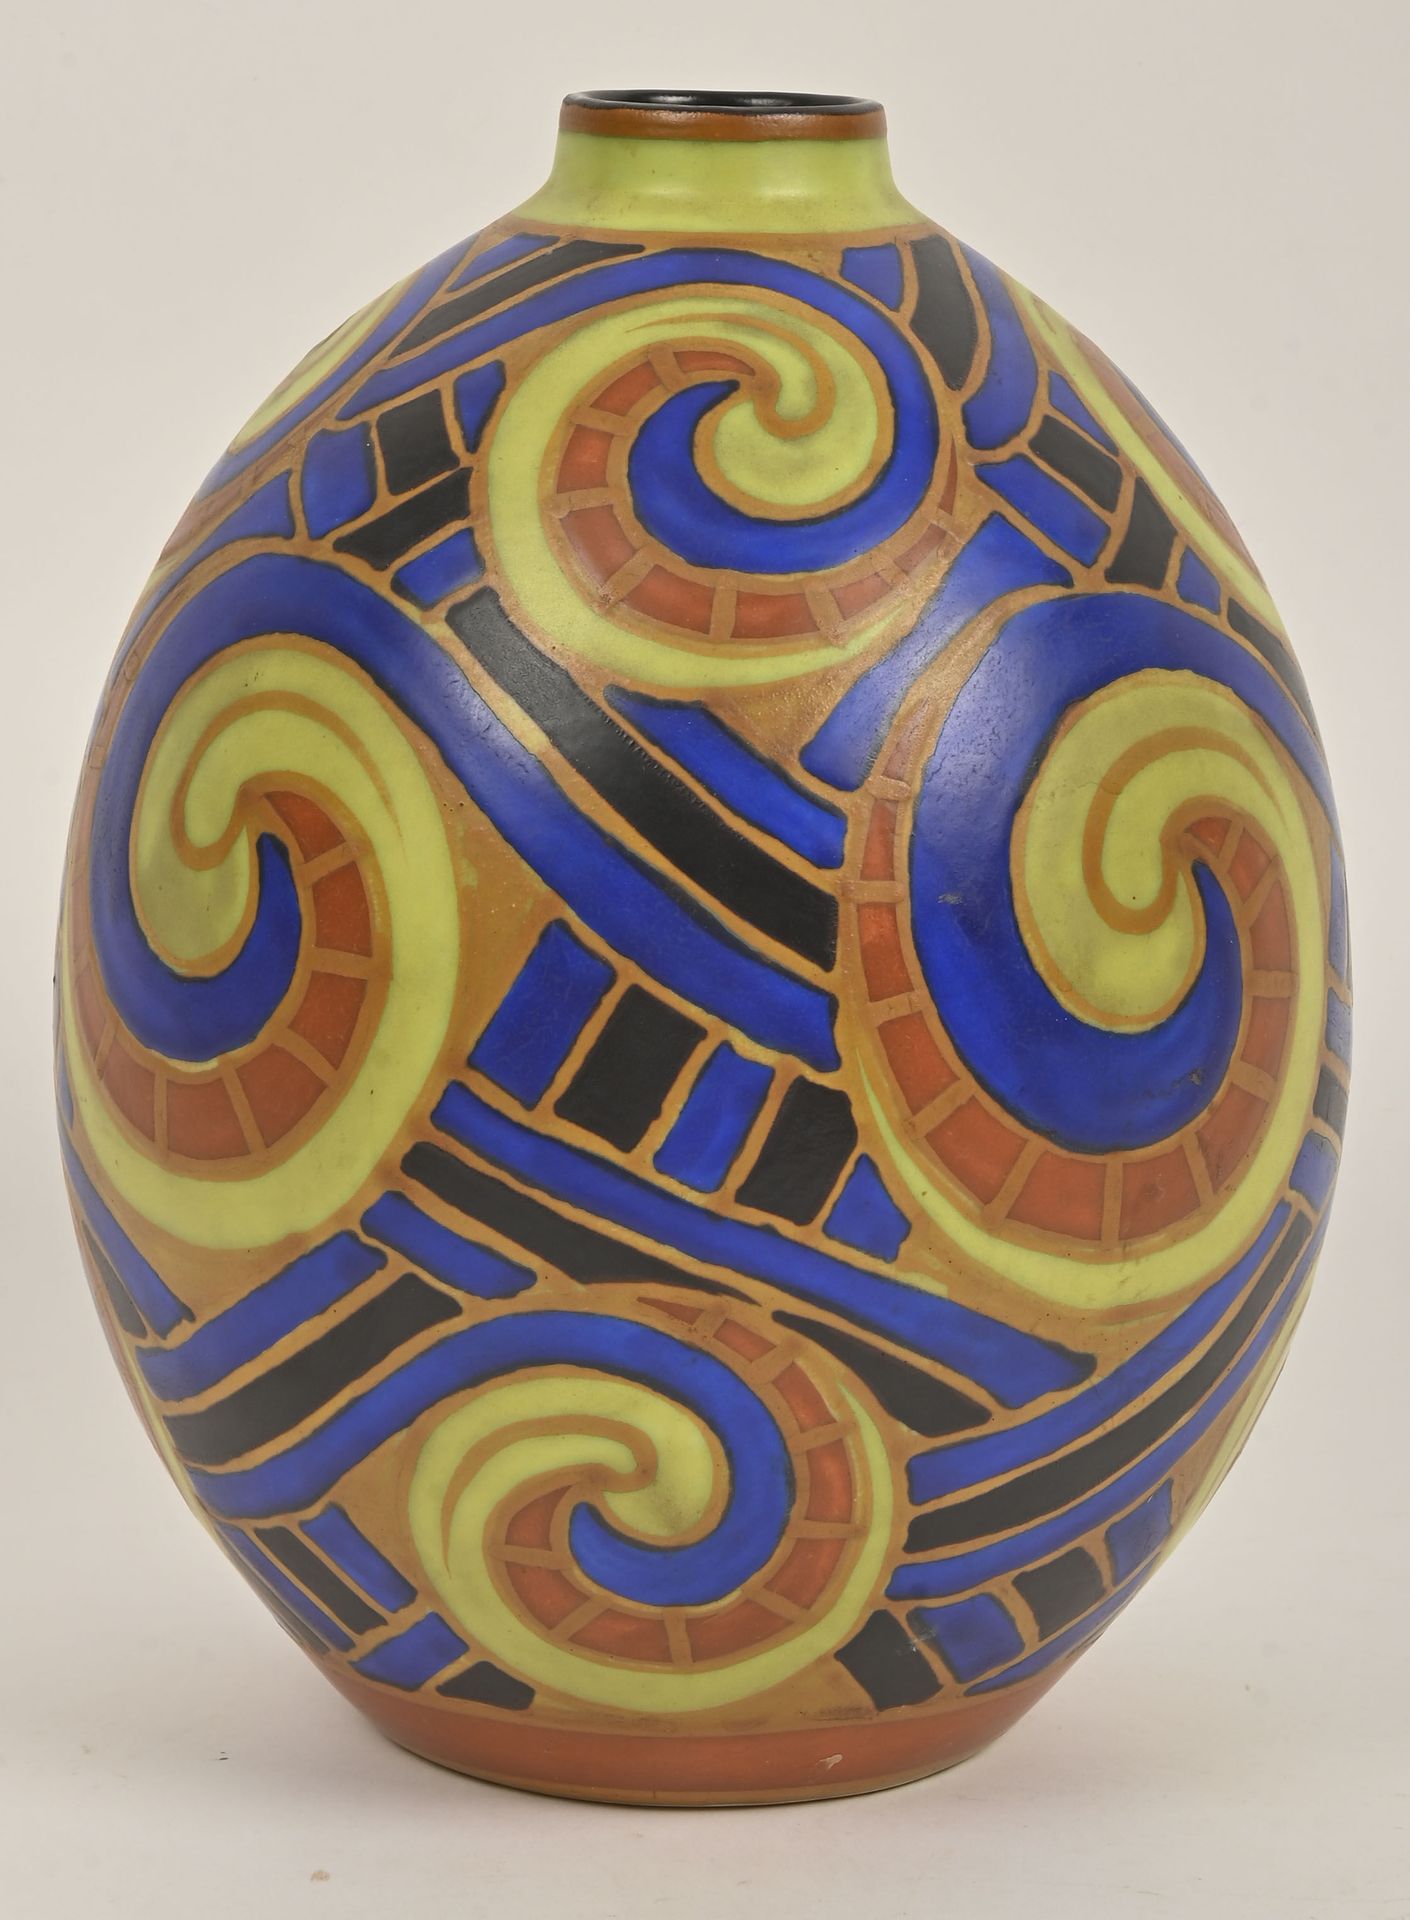 Null 查尔斯-卡托（1880-1966）和布赫兄弟凯拉米斯-拉鲁维耶尔公司
" D. 1169 "
一个卵形的花瓶，有一个小环形的颈部。多色珐琅彩的陶瓷证明&hellip;